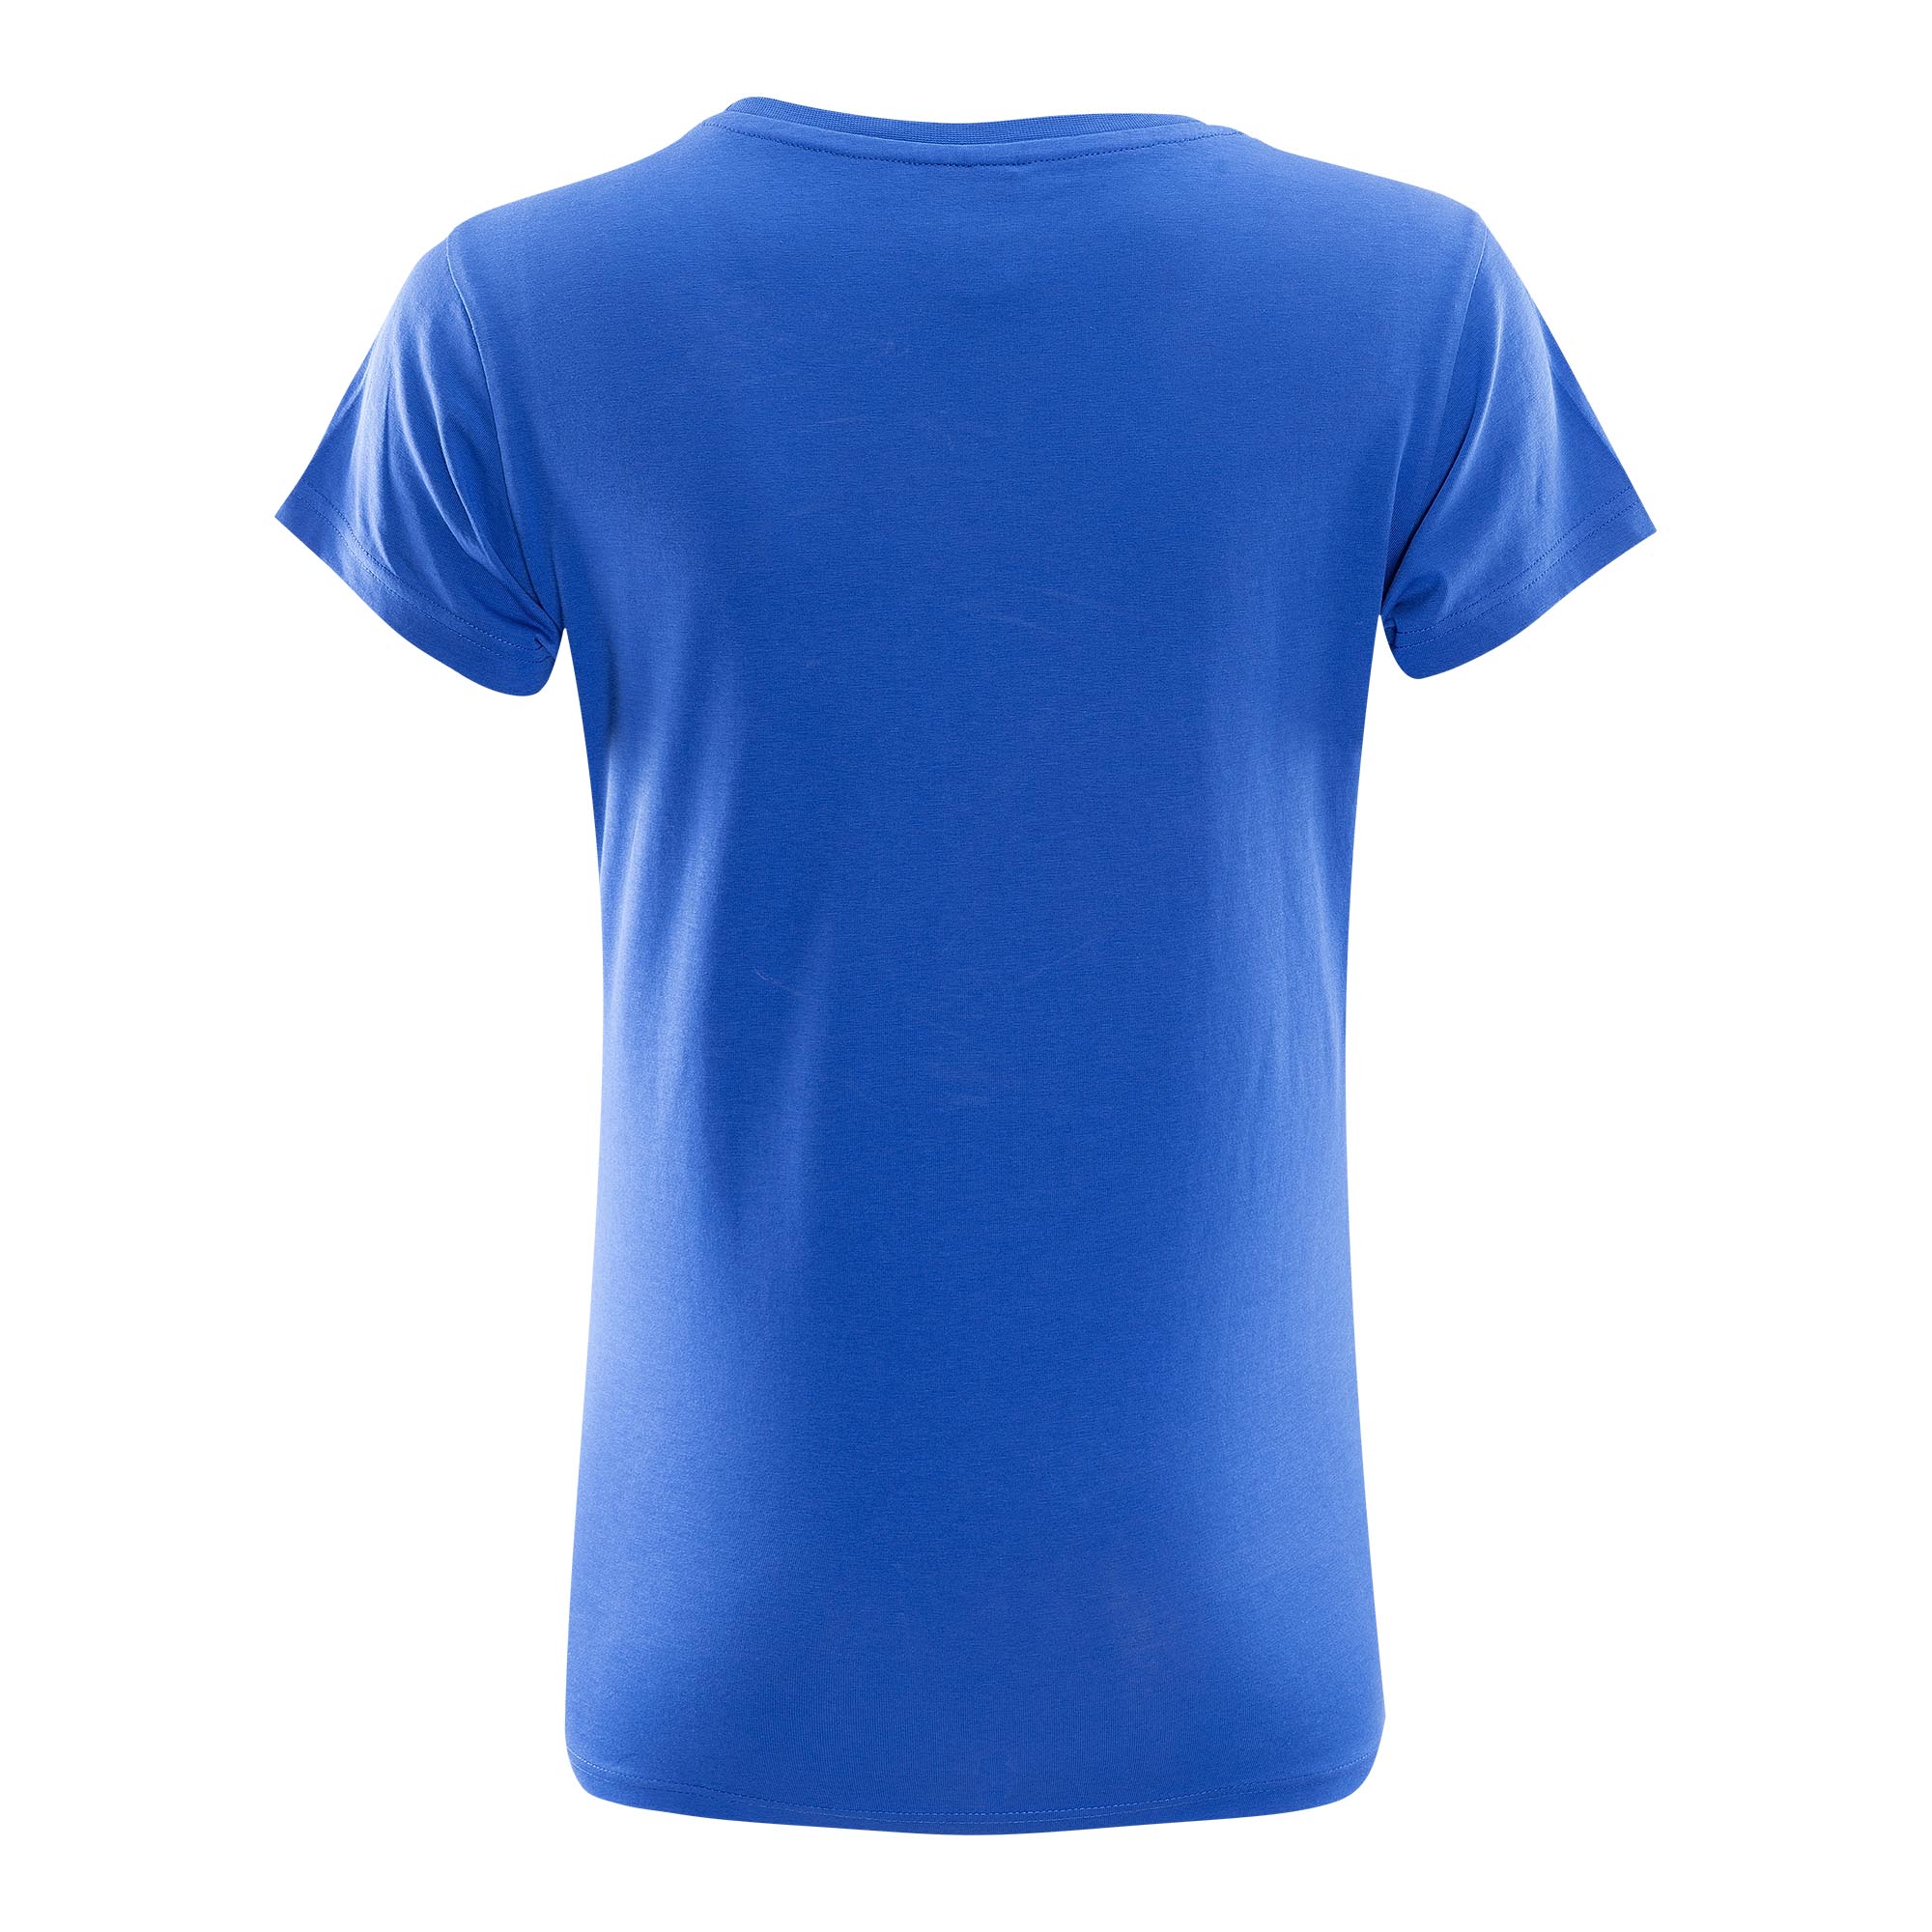 T-Shirt Damen Schalke blau